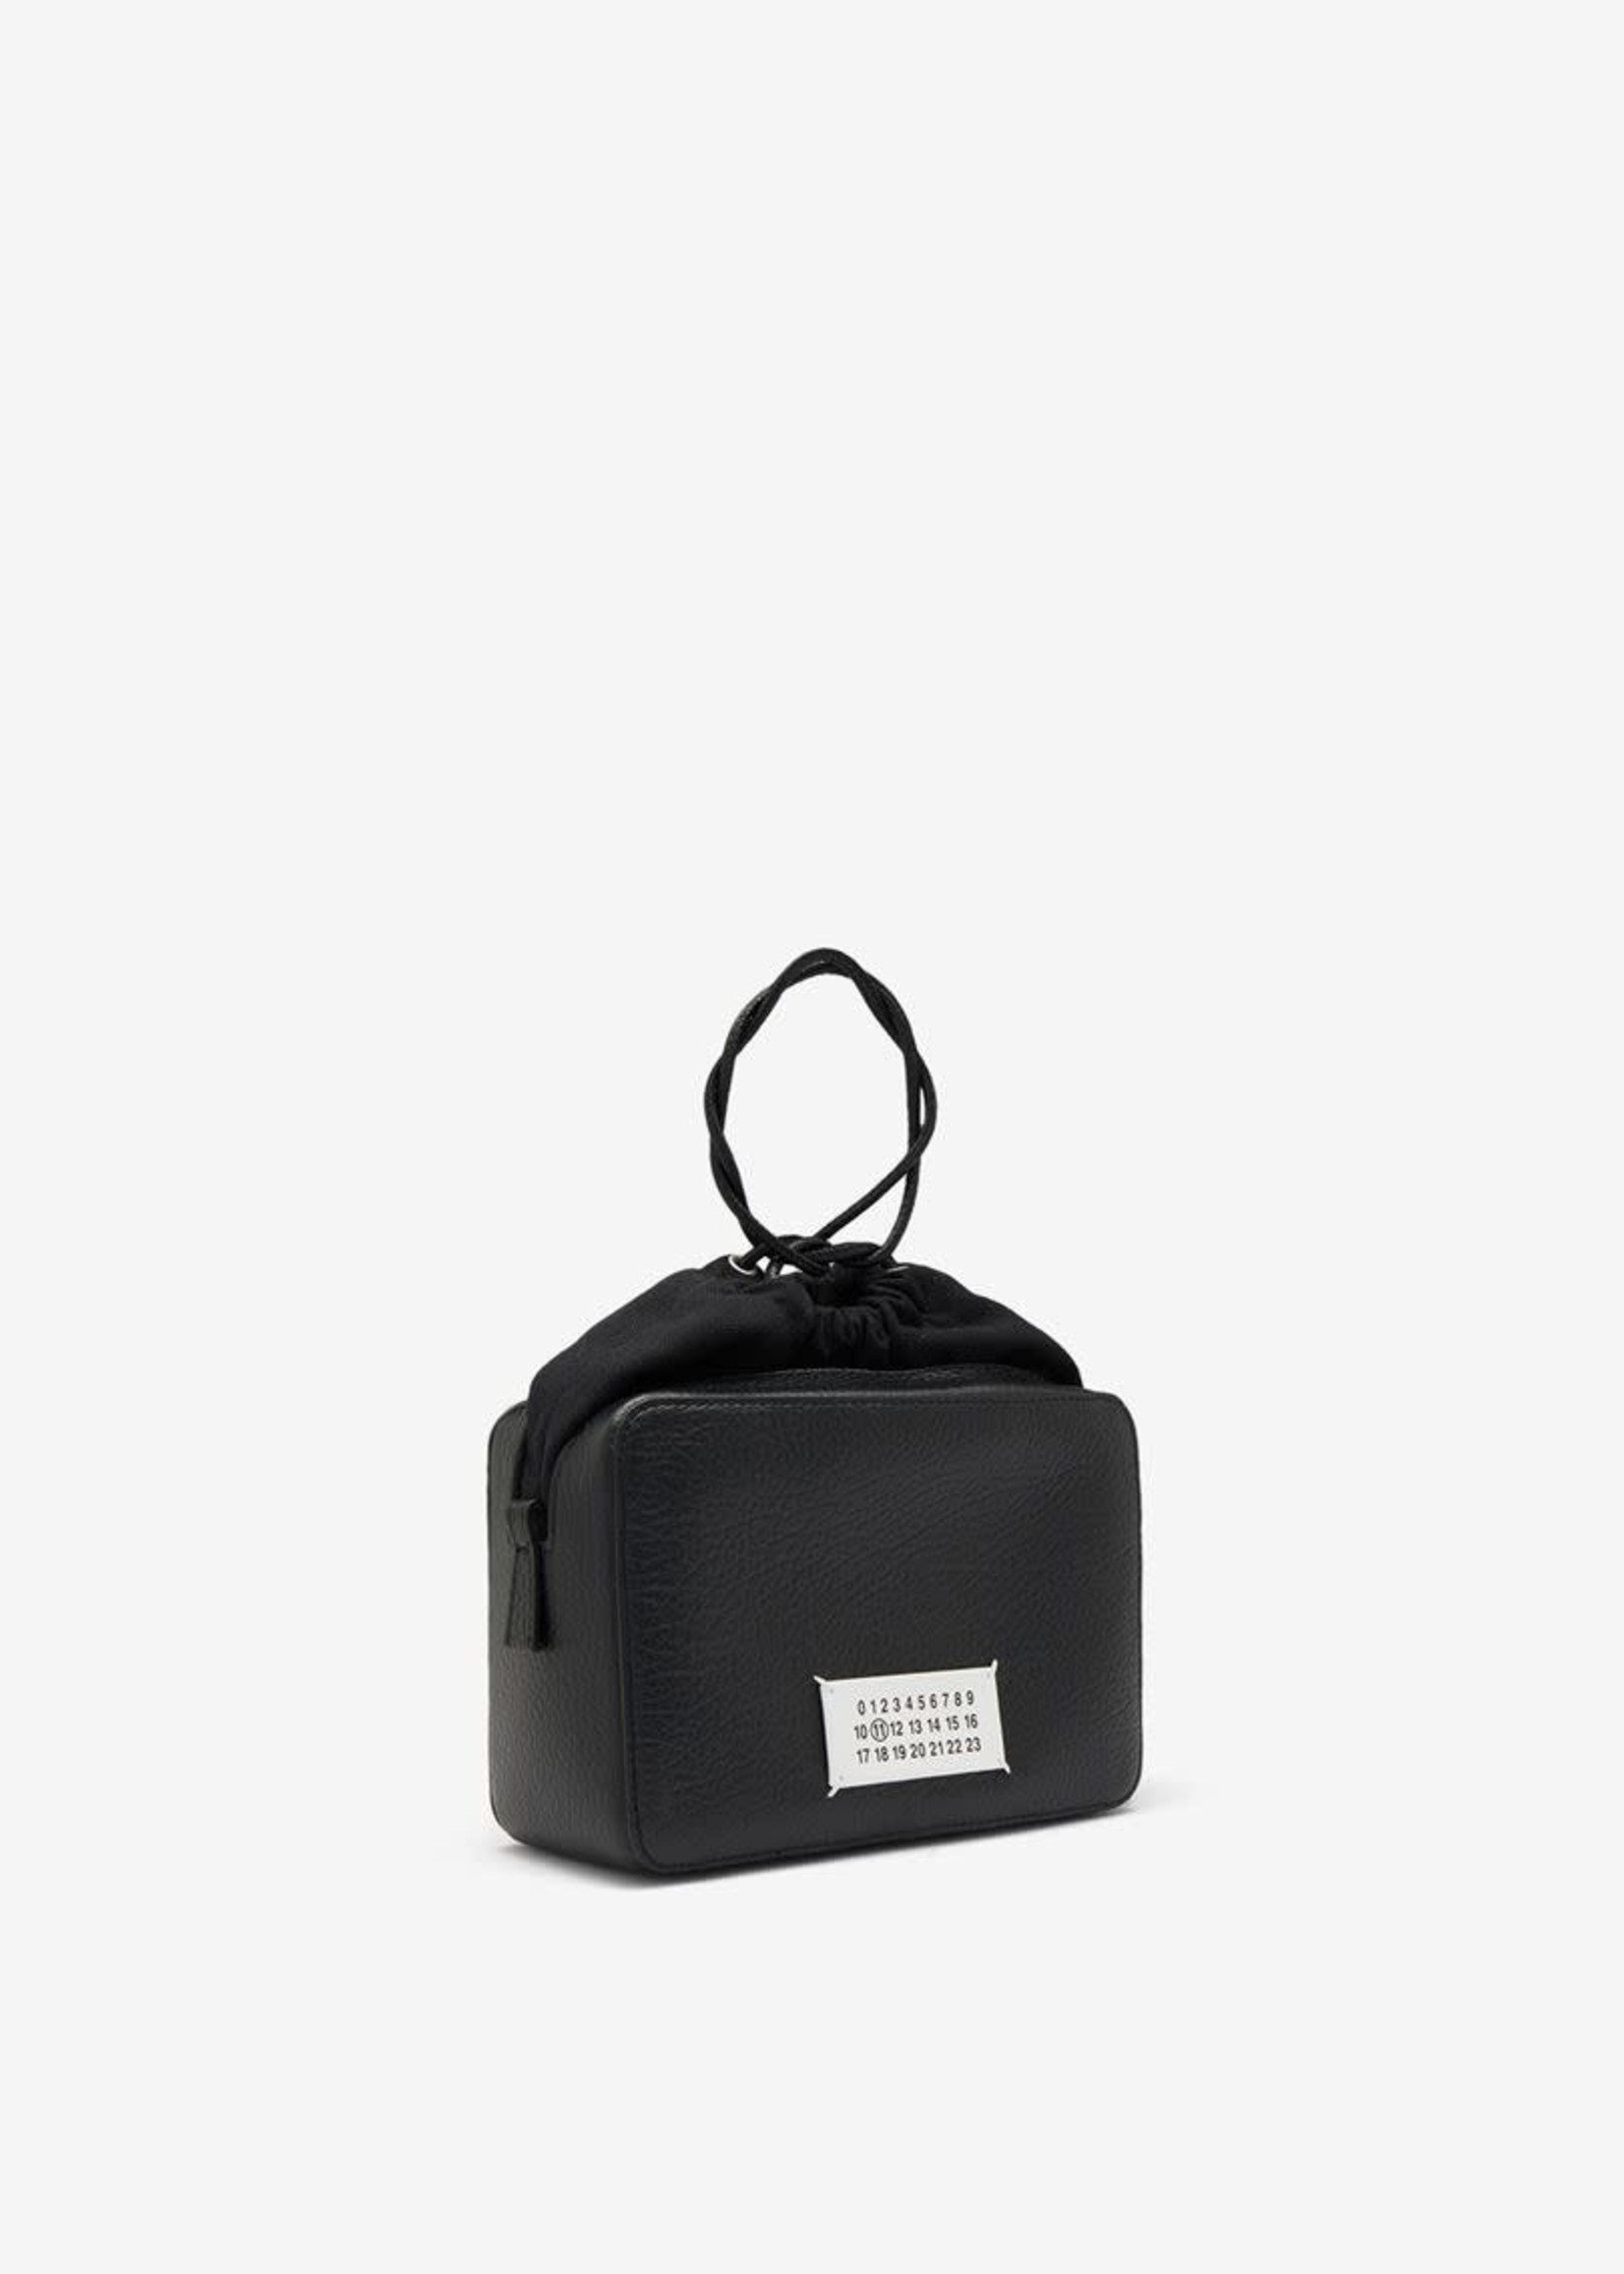 Maison Margiela 5AC Camera Bag in Black Leather